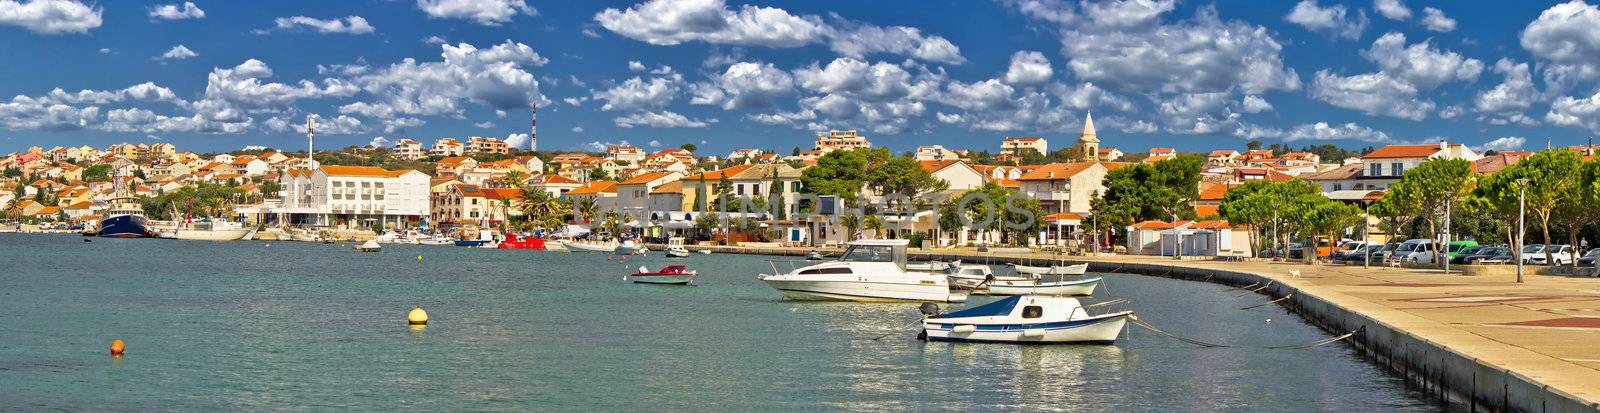 Town of Novalja, Pag islang, Croatia - colorful panorama